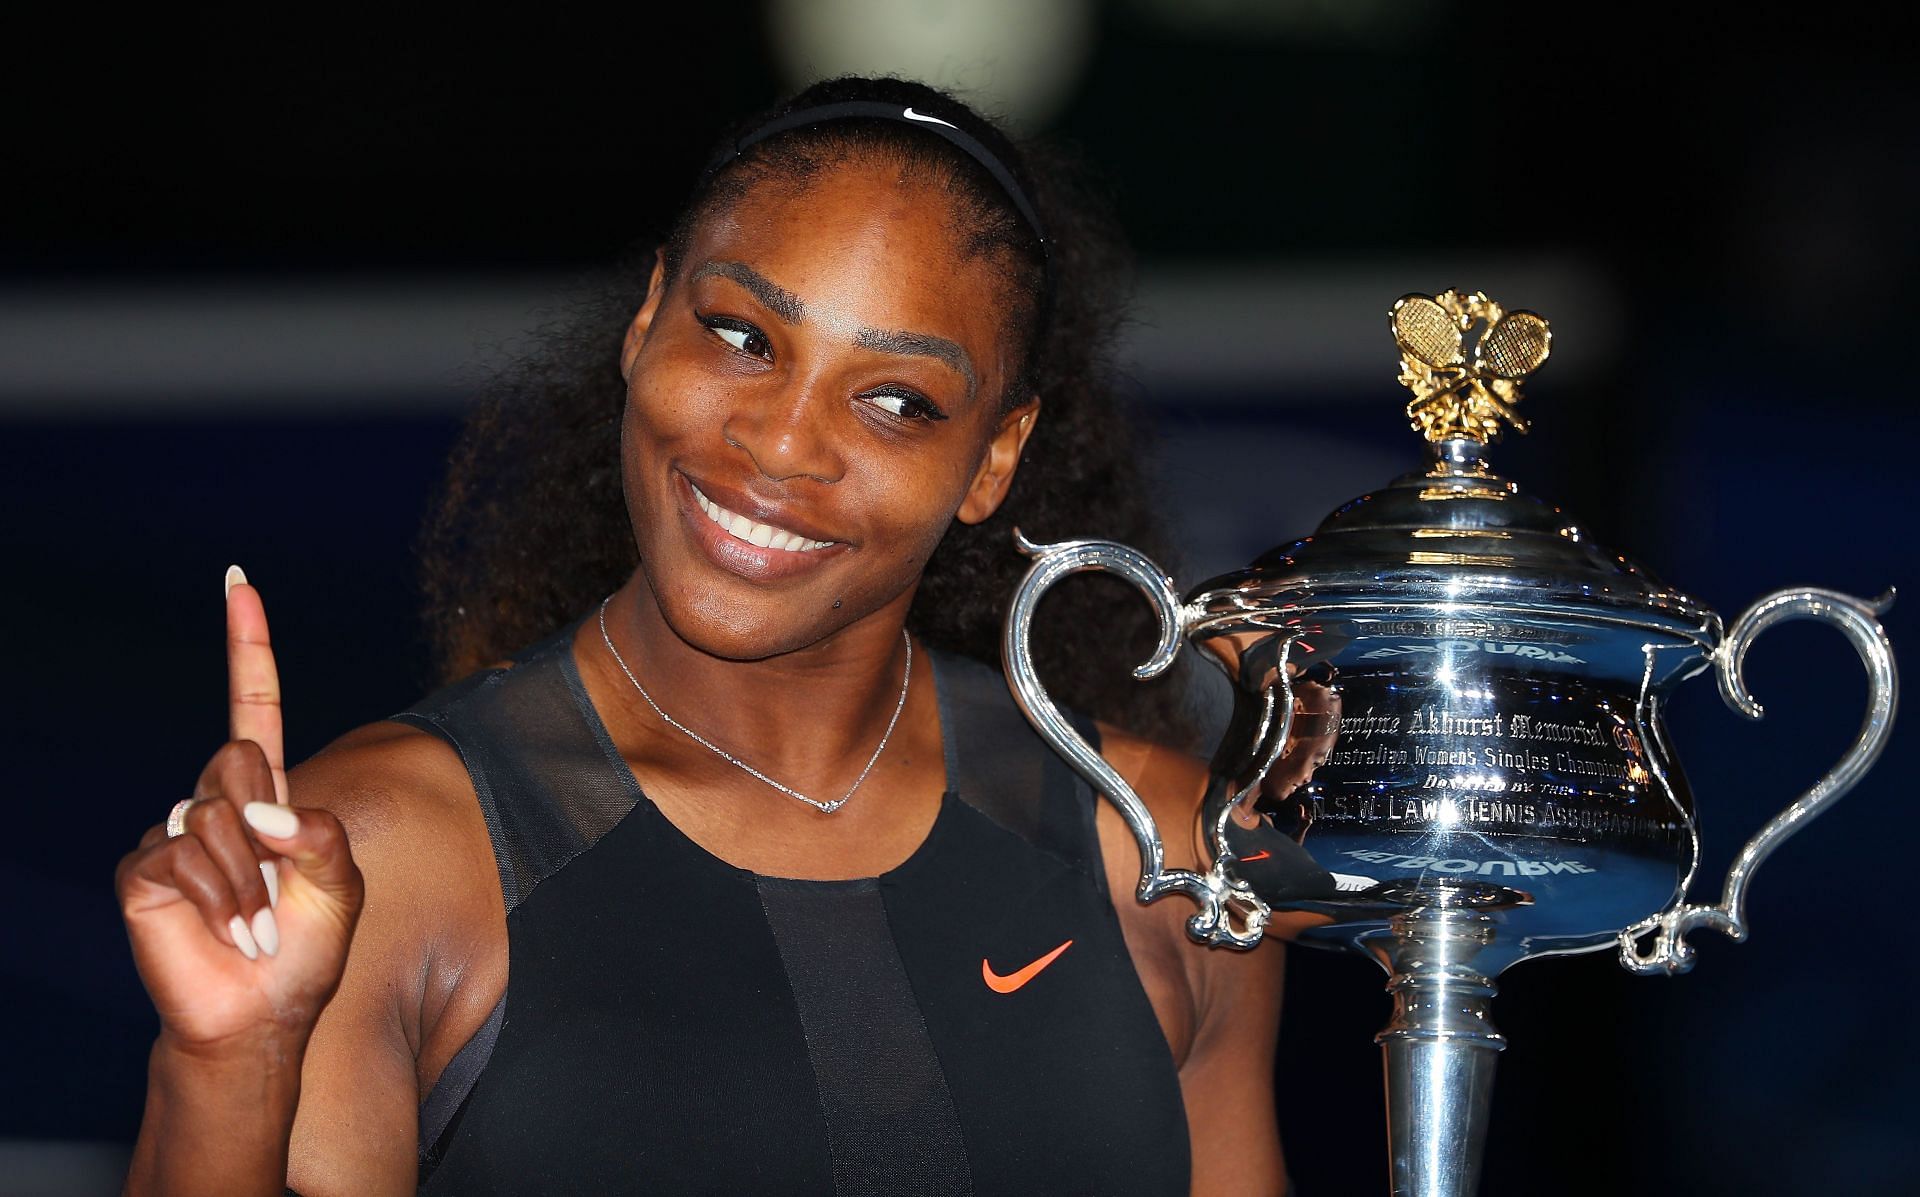 &lt;a href=&#039;https://www.sportskeeda.com/player/serena-williams&#039; target=&#039;_blank&#039; rel=&#039;noopener noreferrer&#039;&gt;Serena Williams&lt;/a&gt; with the 2017 Australian Open trophy